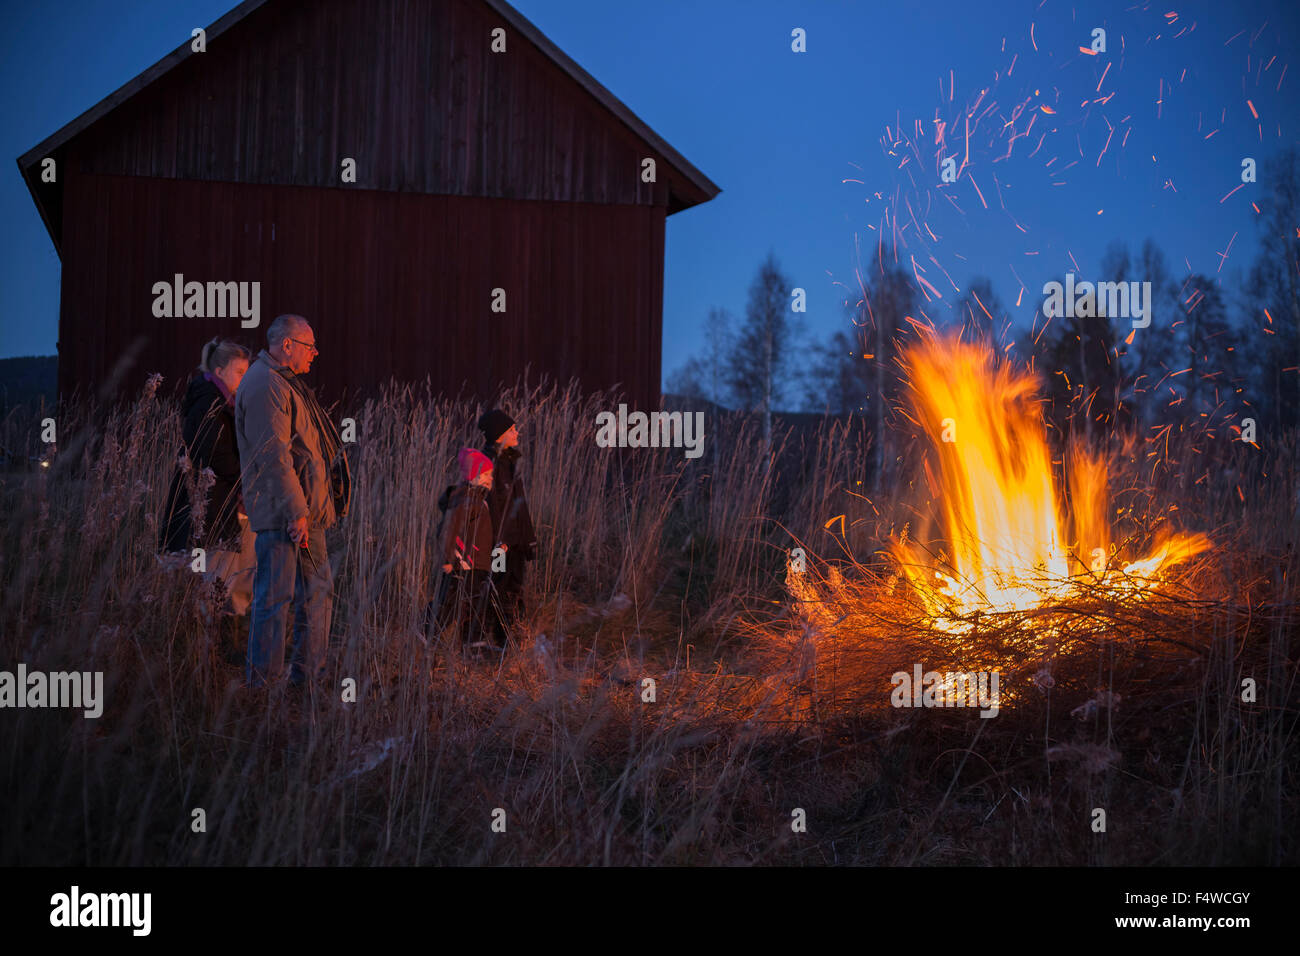 Sweden, Narke, Filipshyttan, Grandfather with grandchildren (6-7,8-9,16-17) looking at bonfire Stock Photo